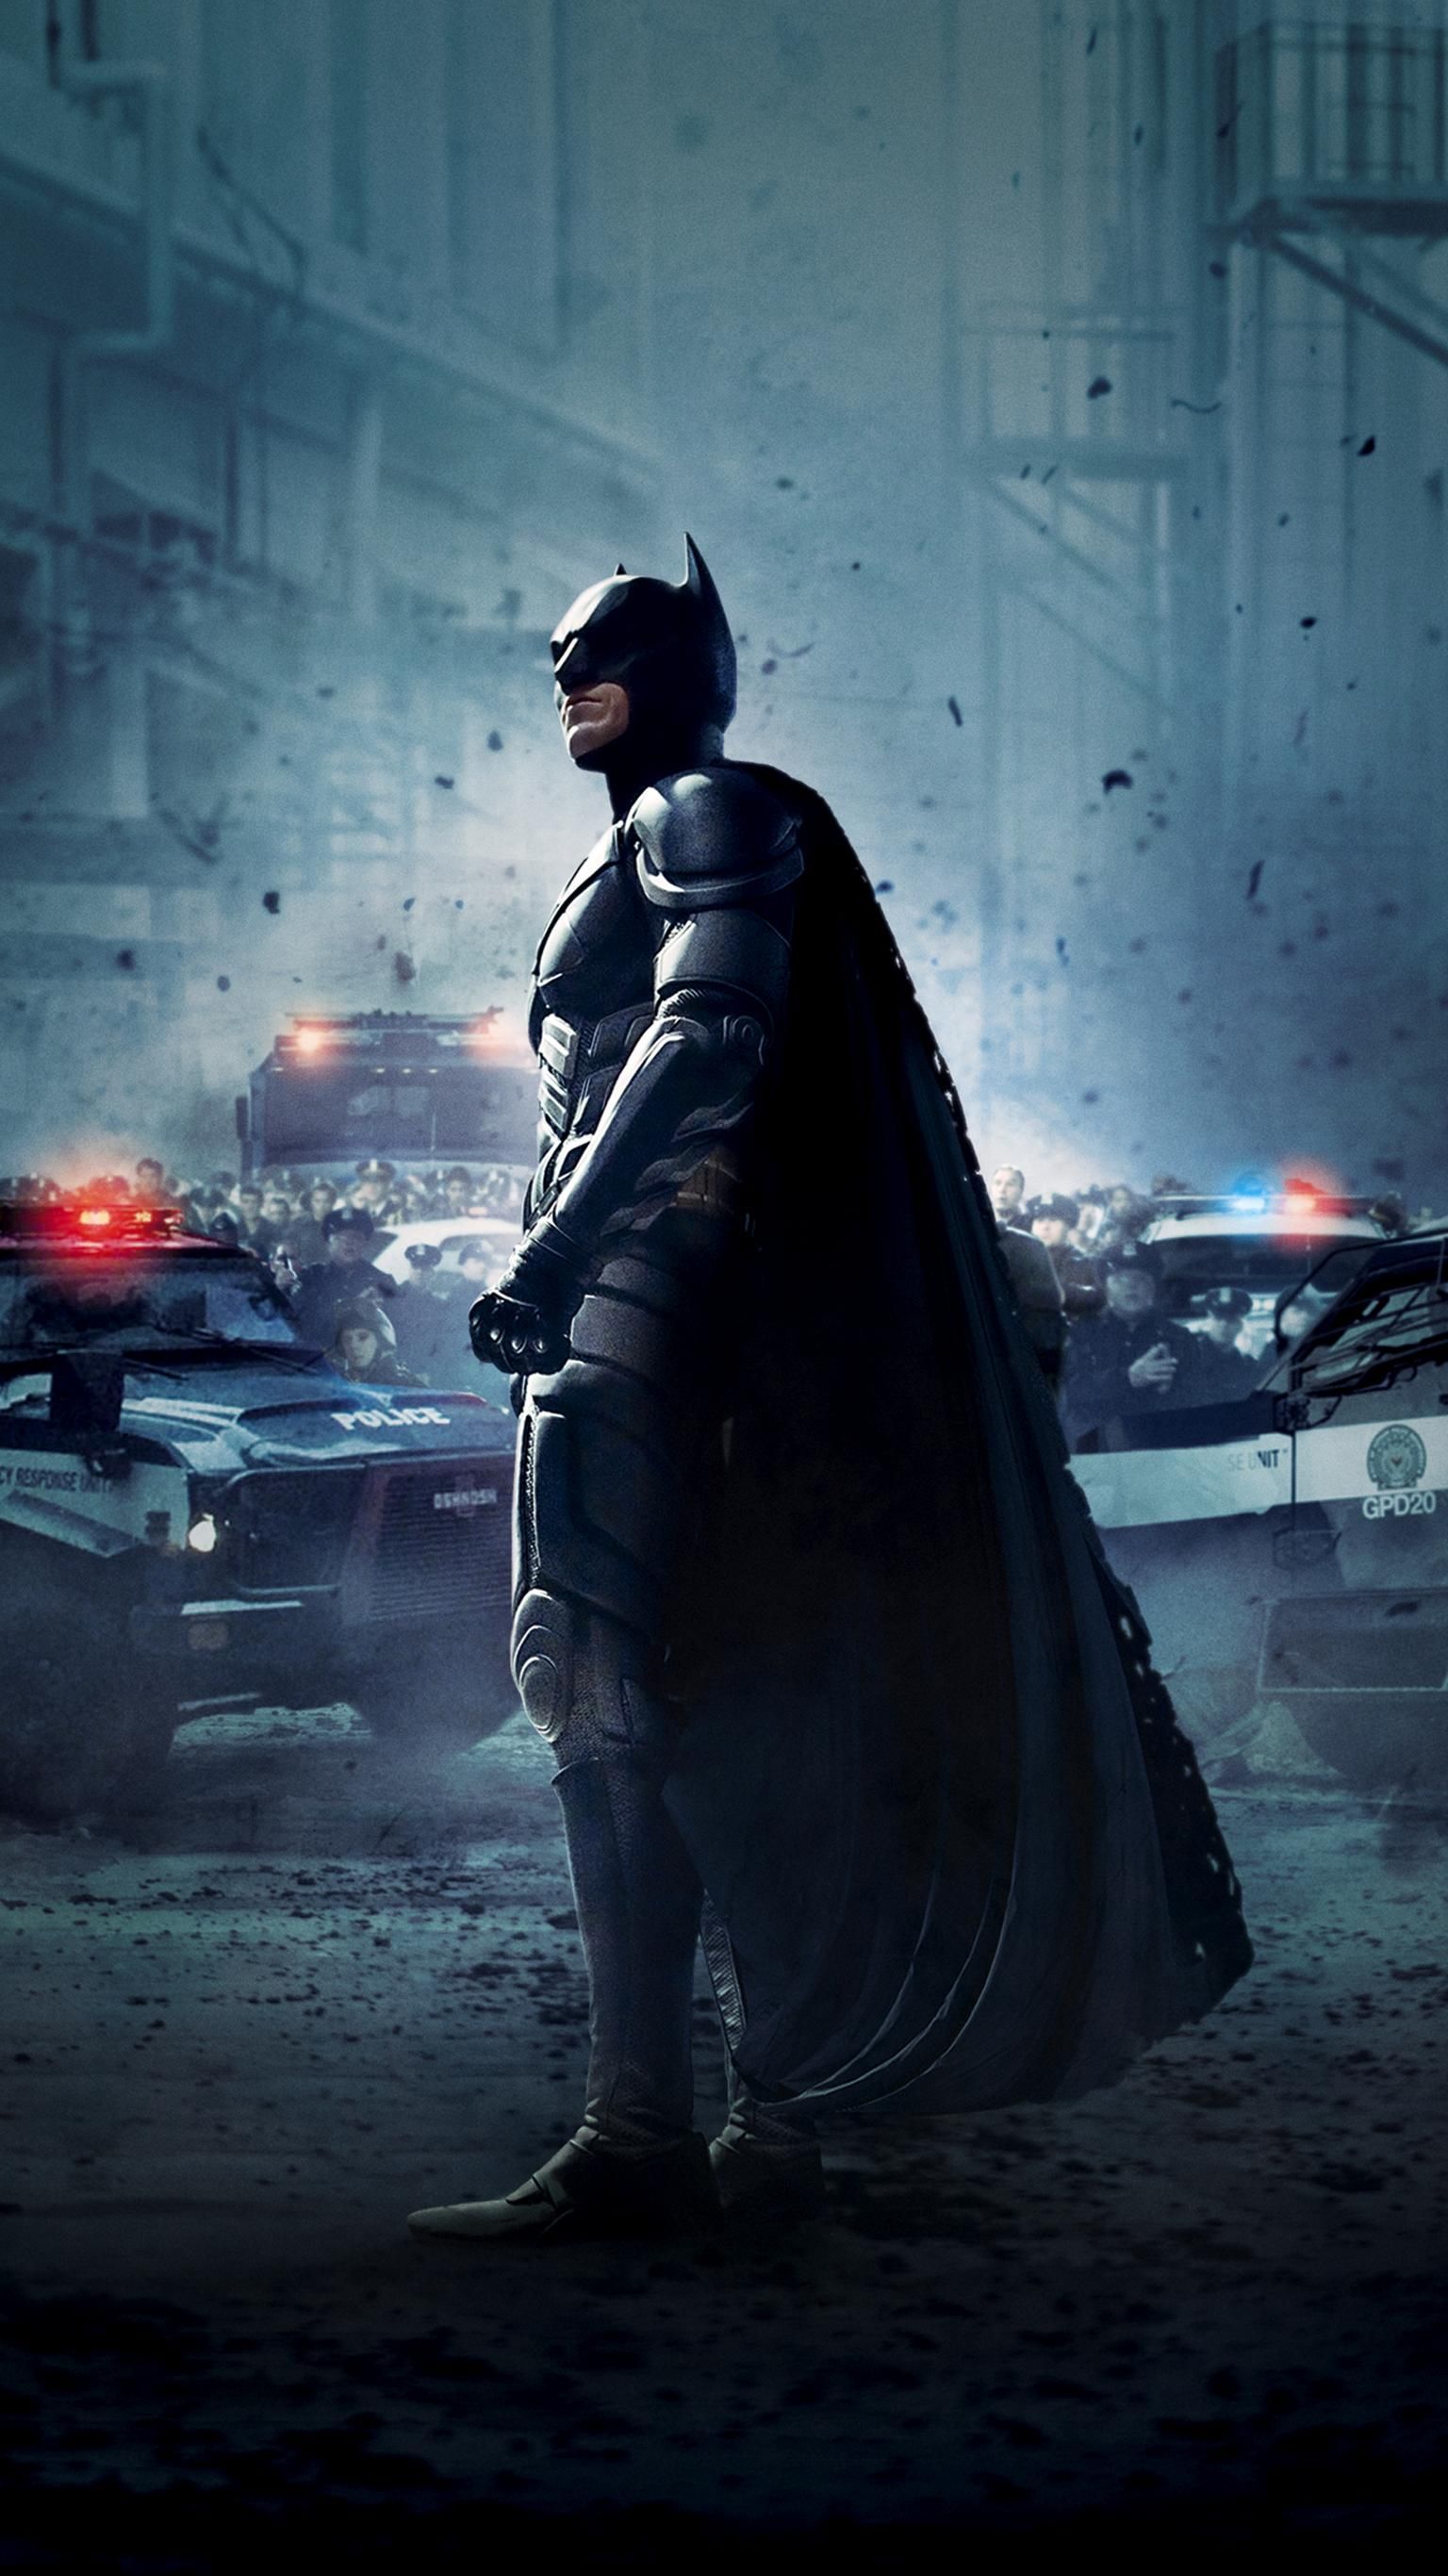 Movies Batman Christian Bale Bane The Dark Knight Rises Tom Hardy wallpaper   1920x1080  671618  WallpaperUP